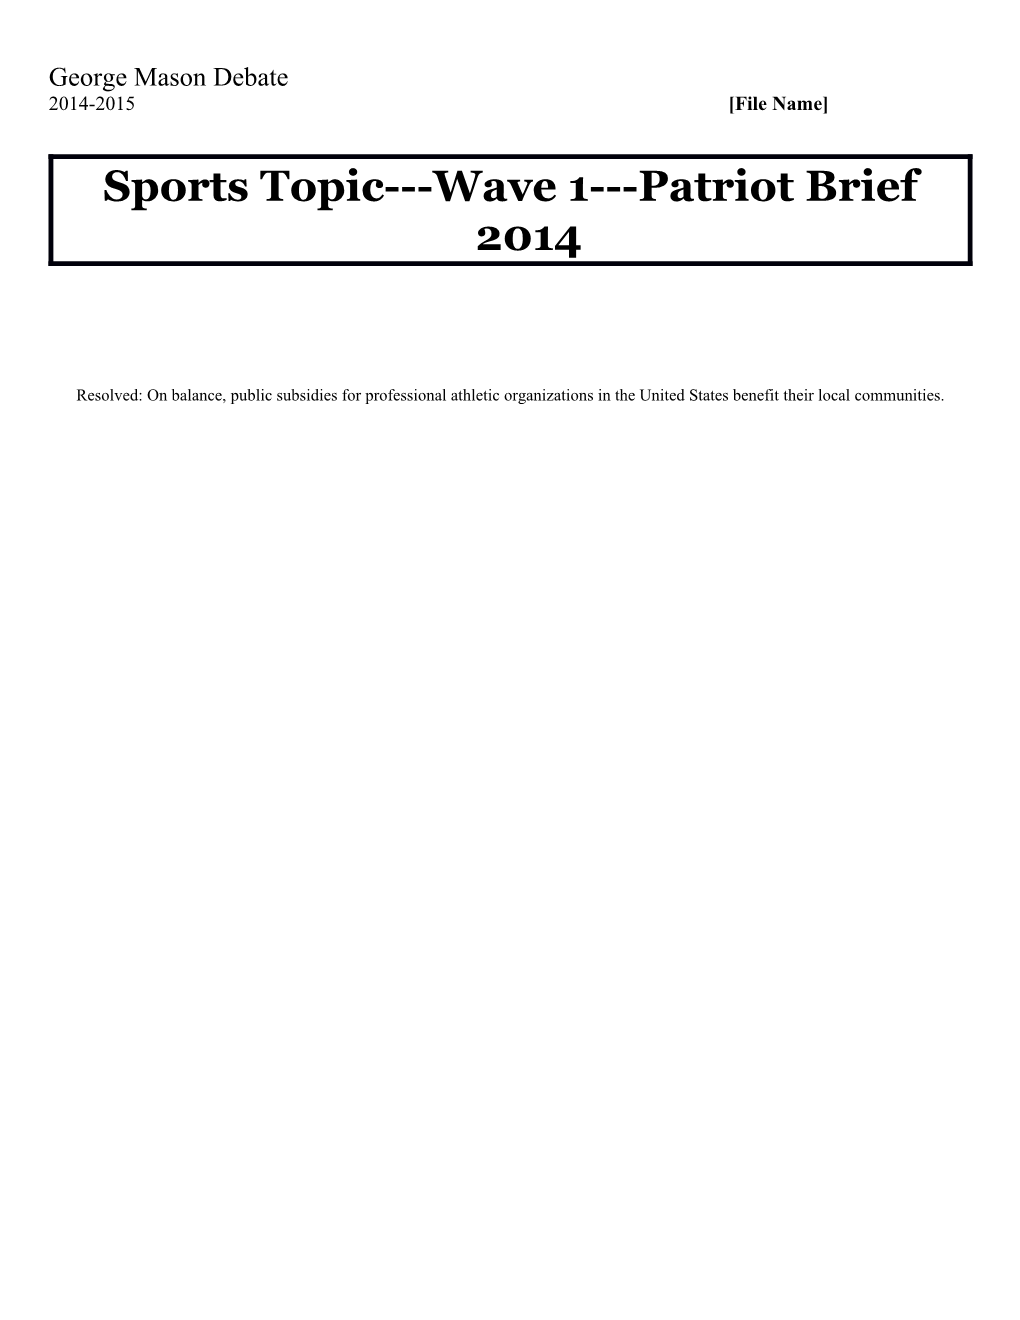 Sports Topic Wave 1 Patriot Brief 2014